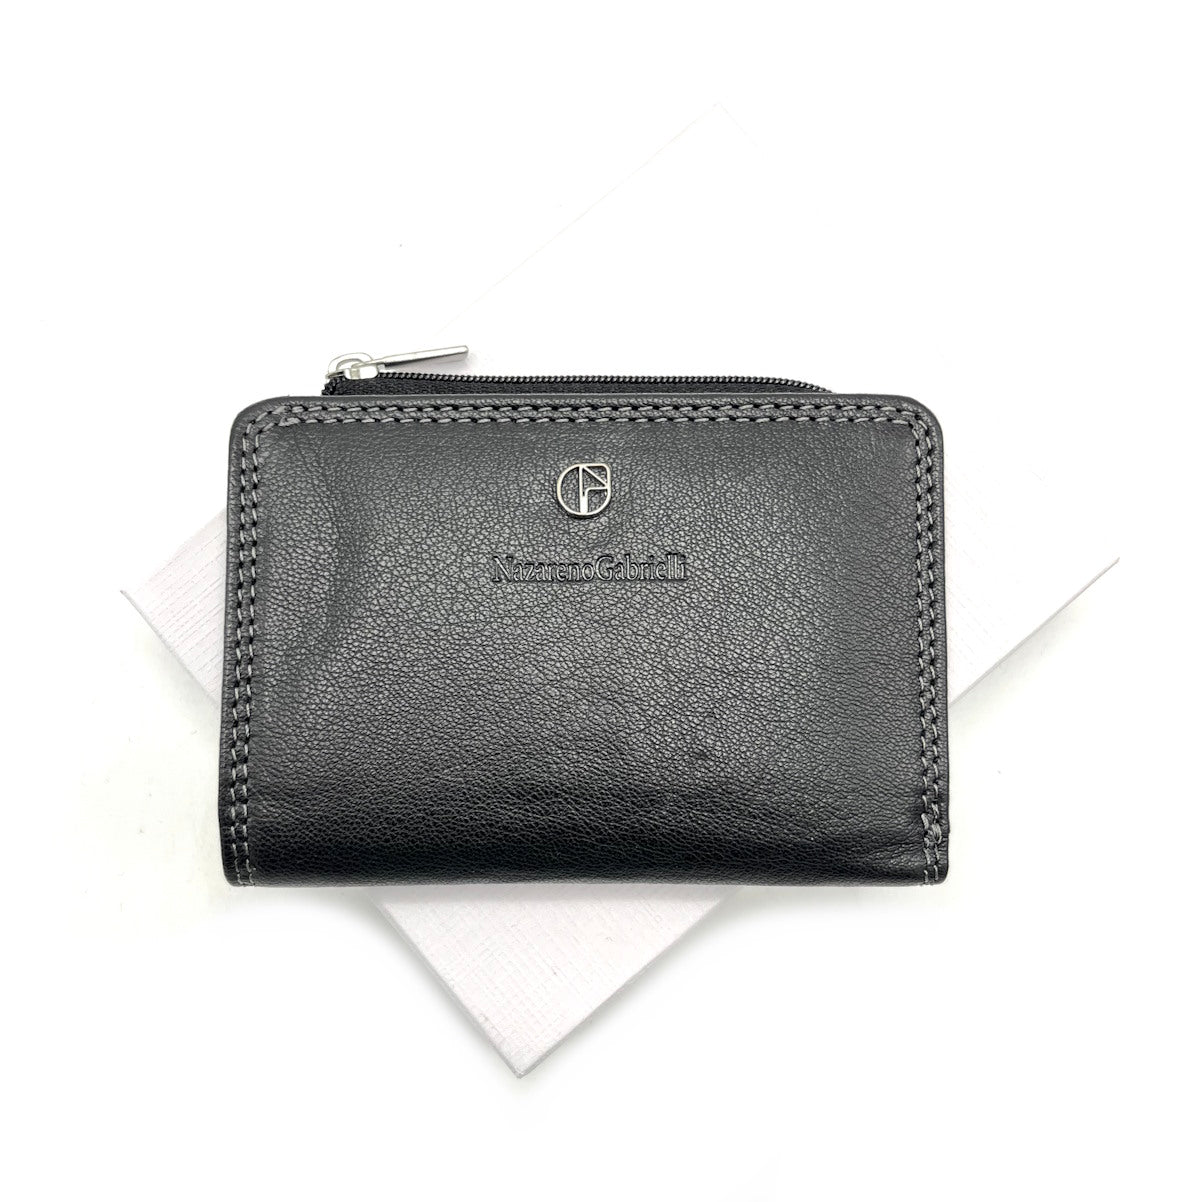 Genuine leather wallet, N.Gabrielli, art. PDK391-77